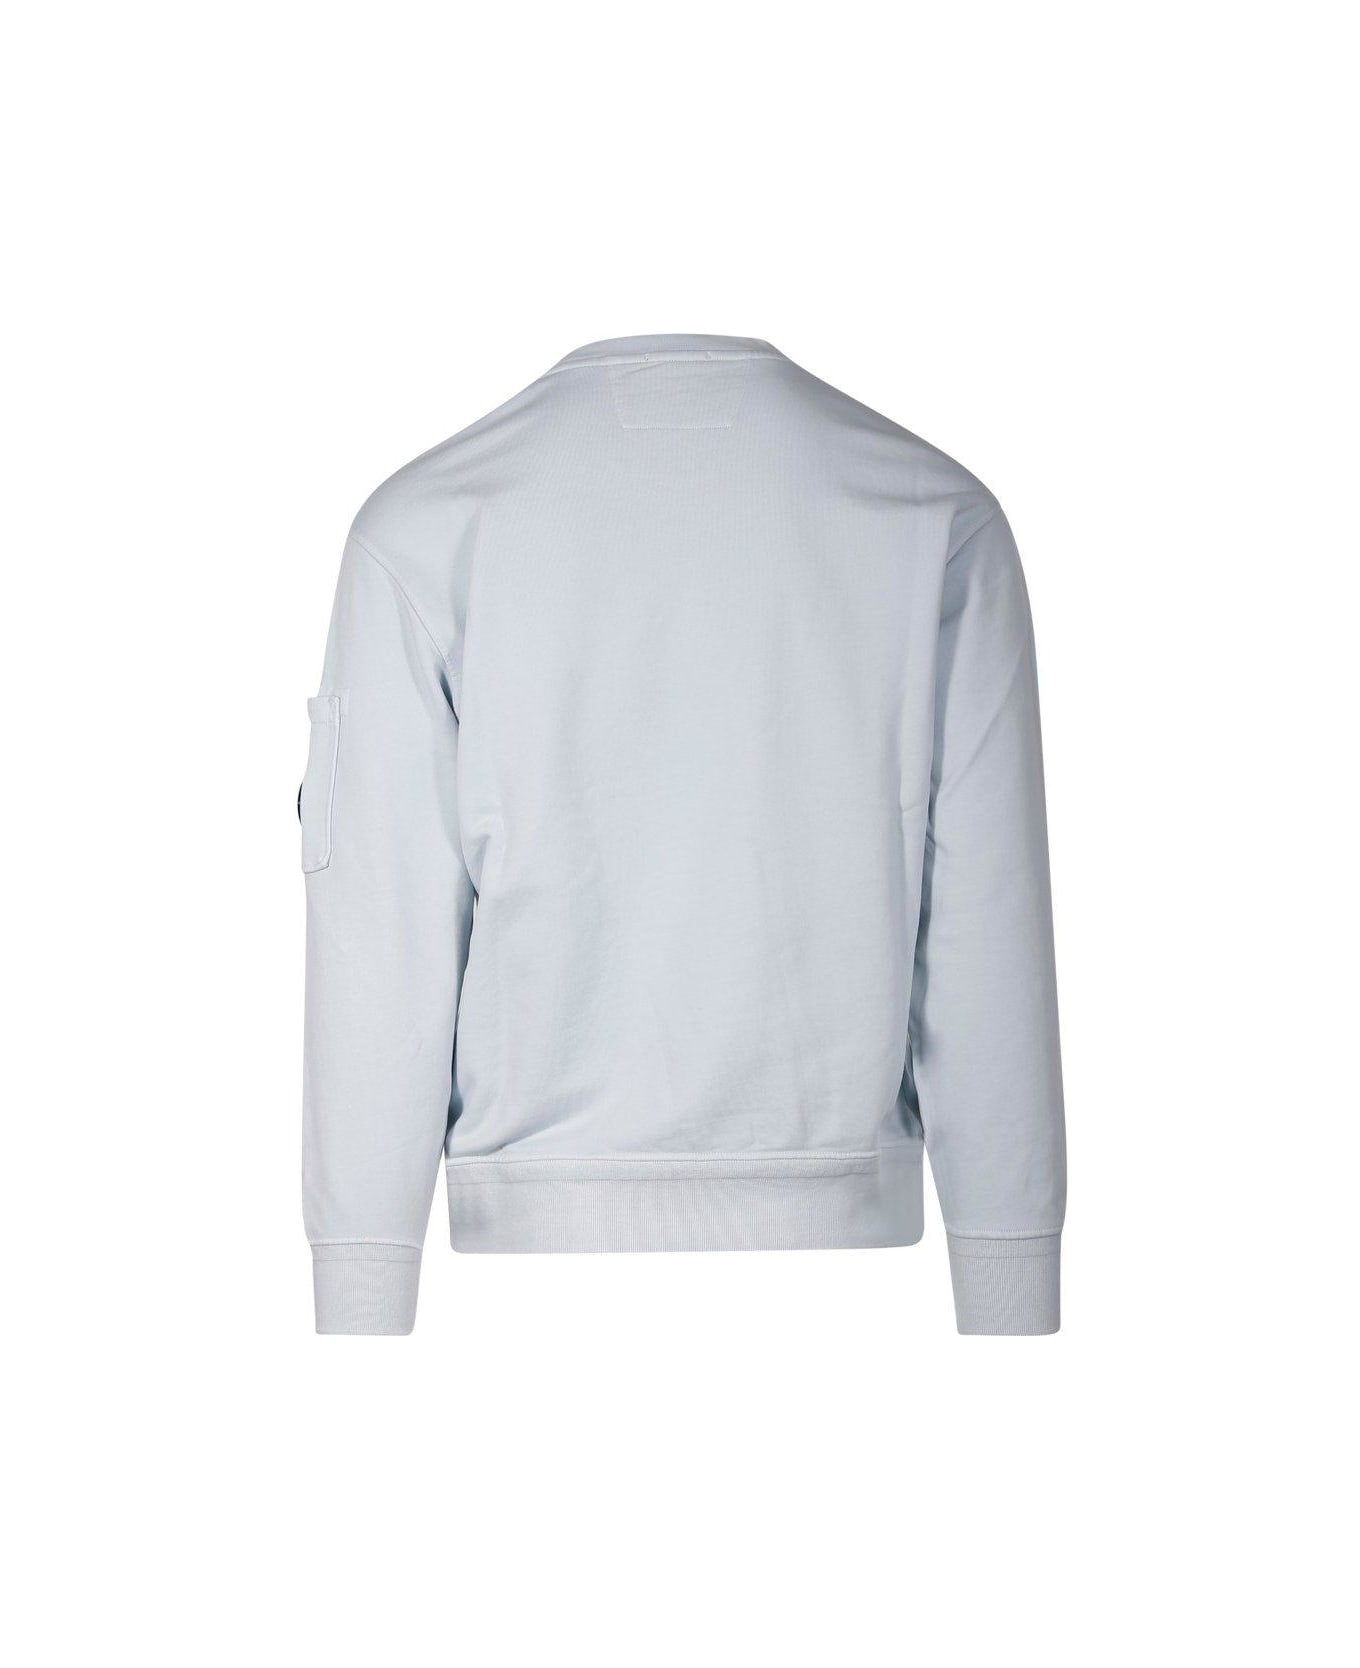 C.P. Company Crewneck Sleeved Sweatshirt - Azzurro